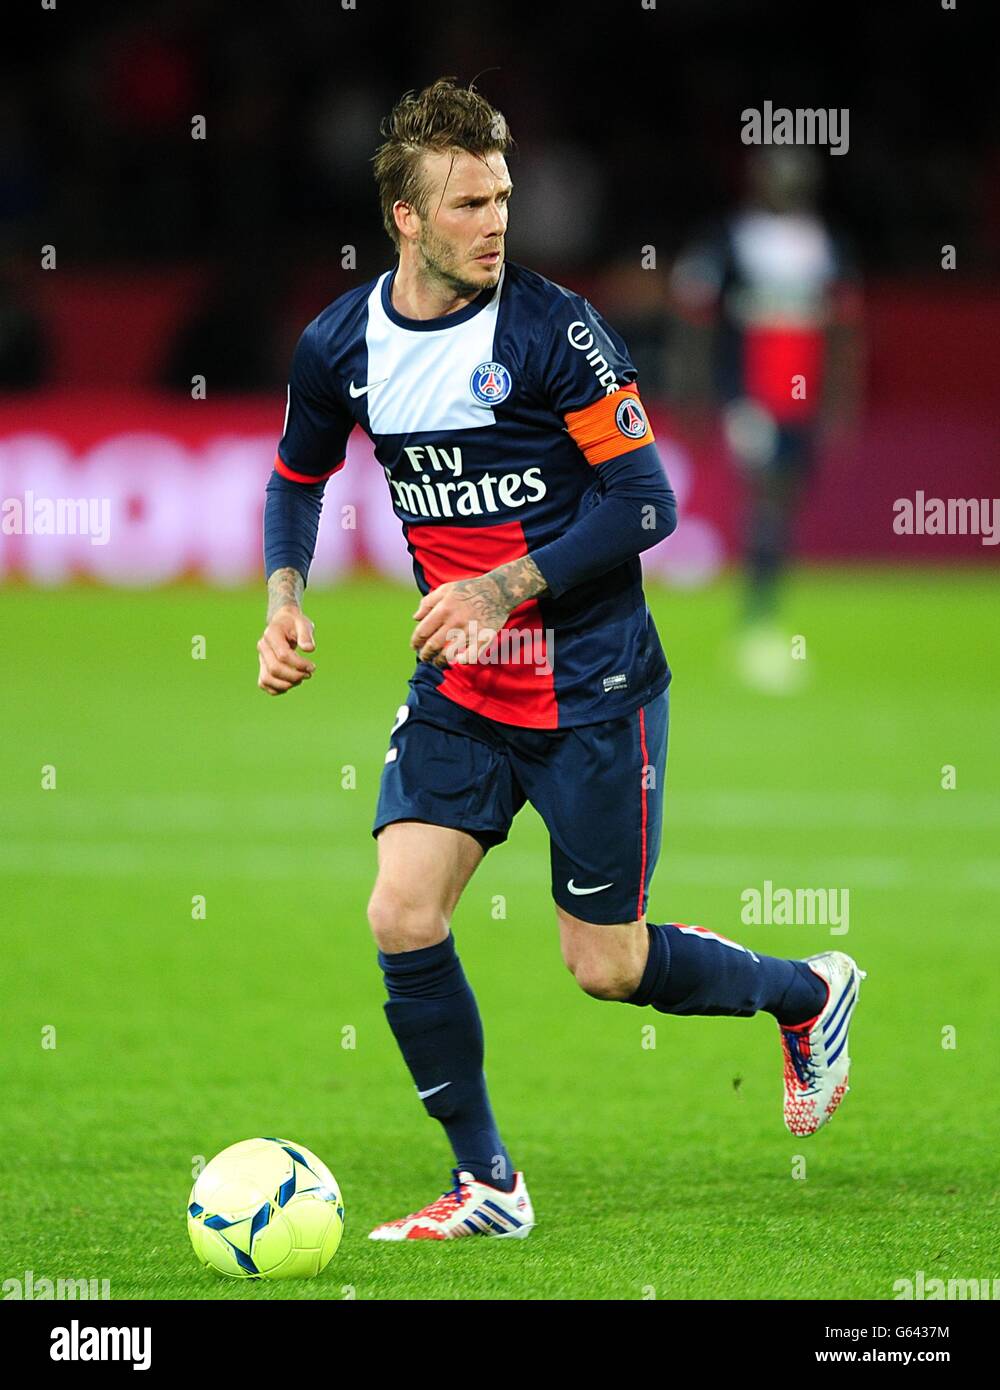 Calcio - Ligue 1 - Paris Saint Germain v Stade Brestois - Parc de Princes. David Beckham di Parigi Saint-Germain in azione Foto Stock